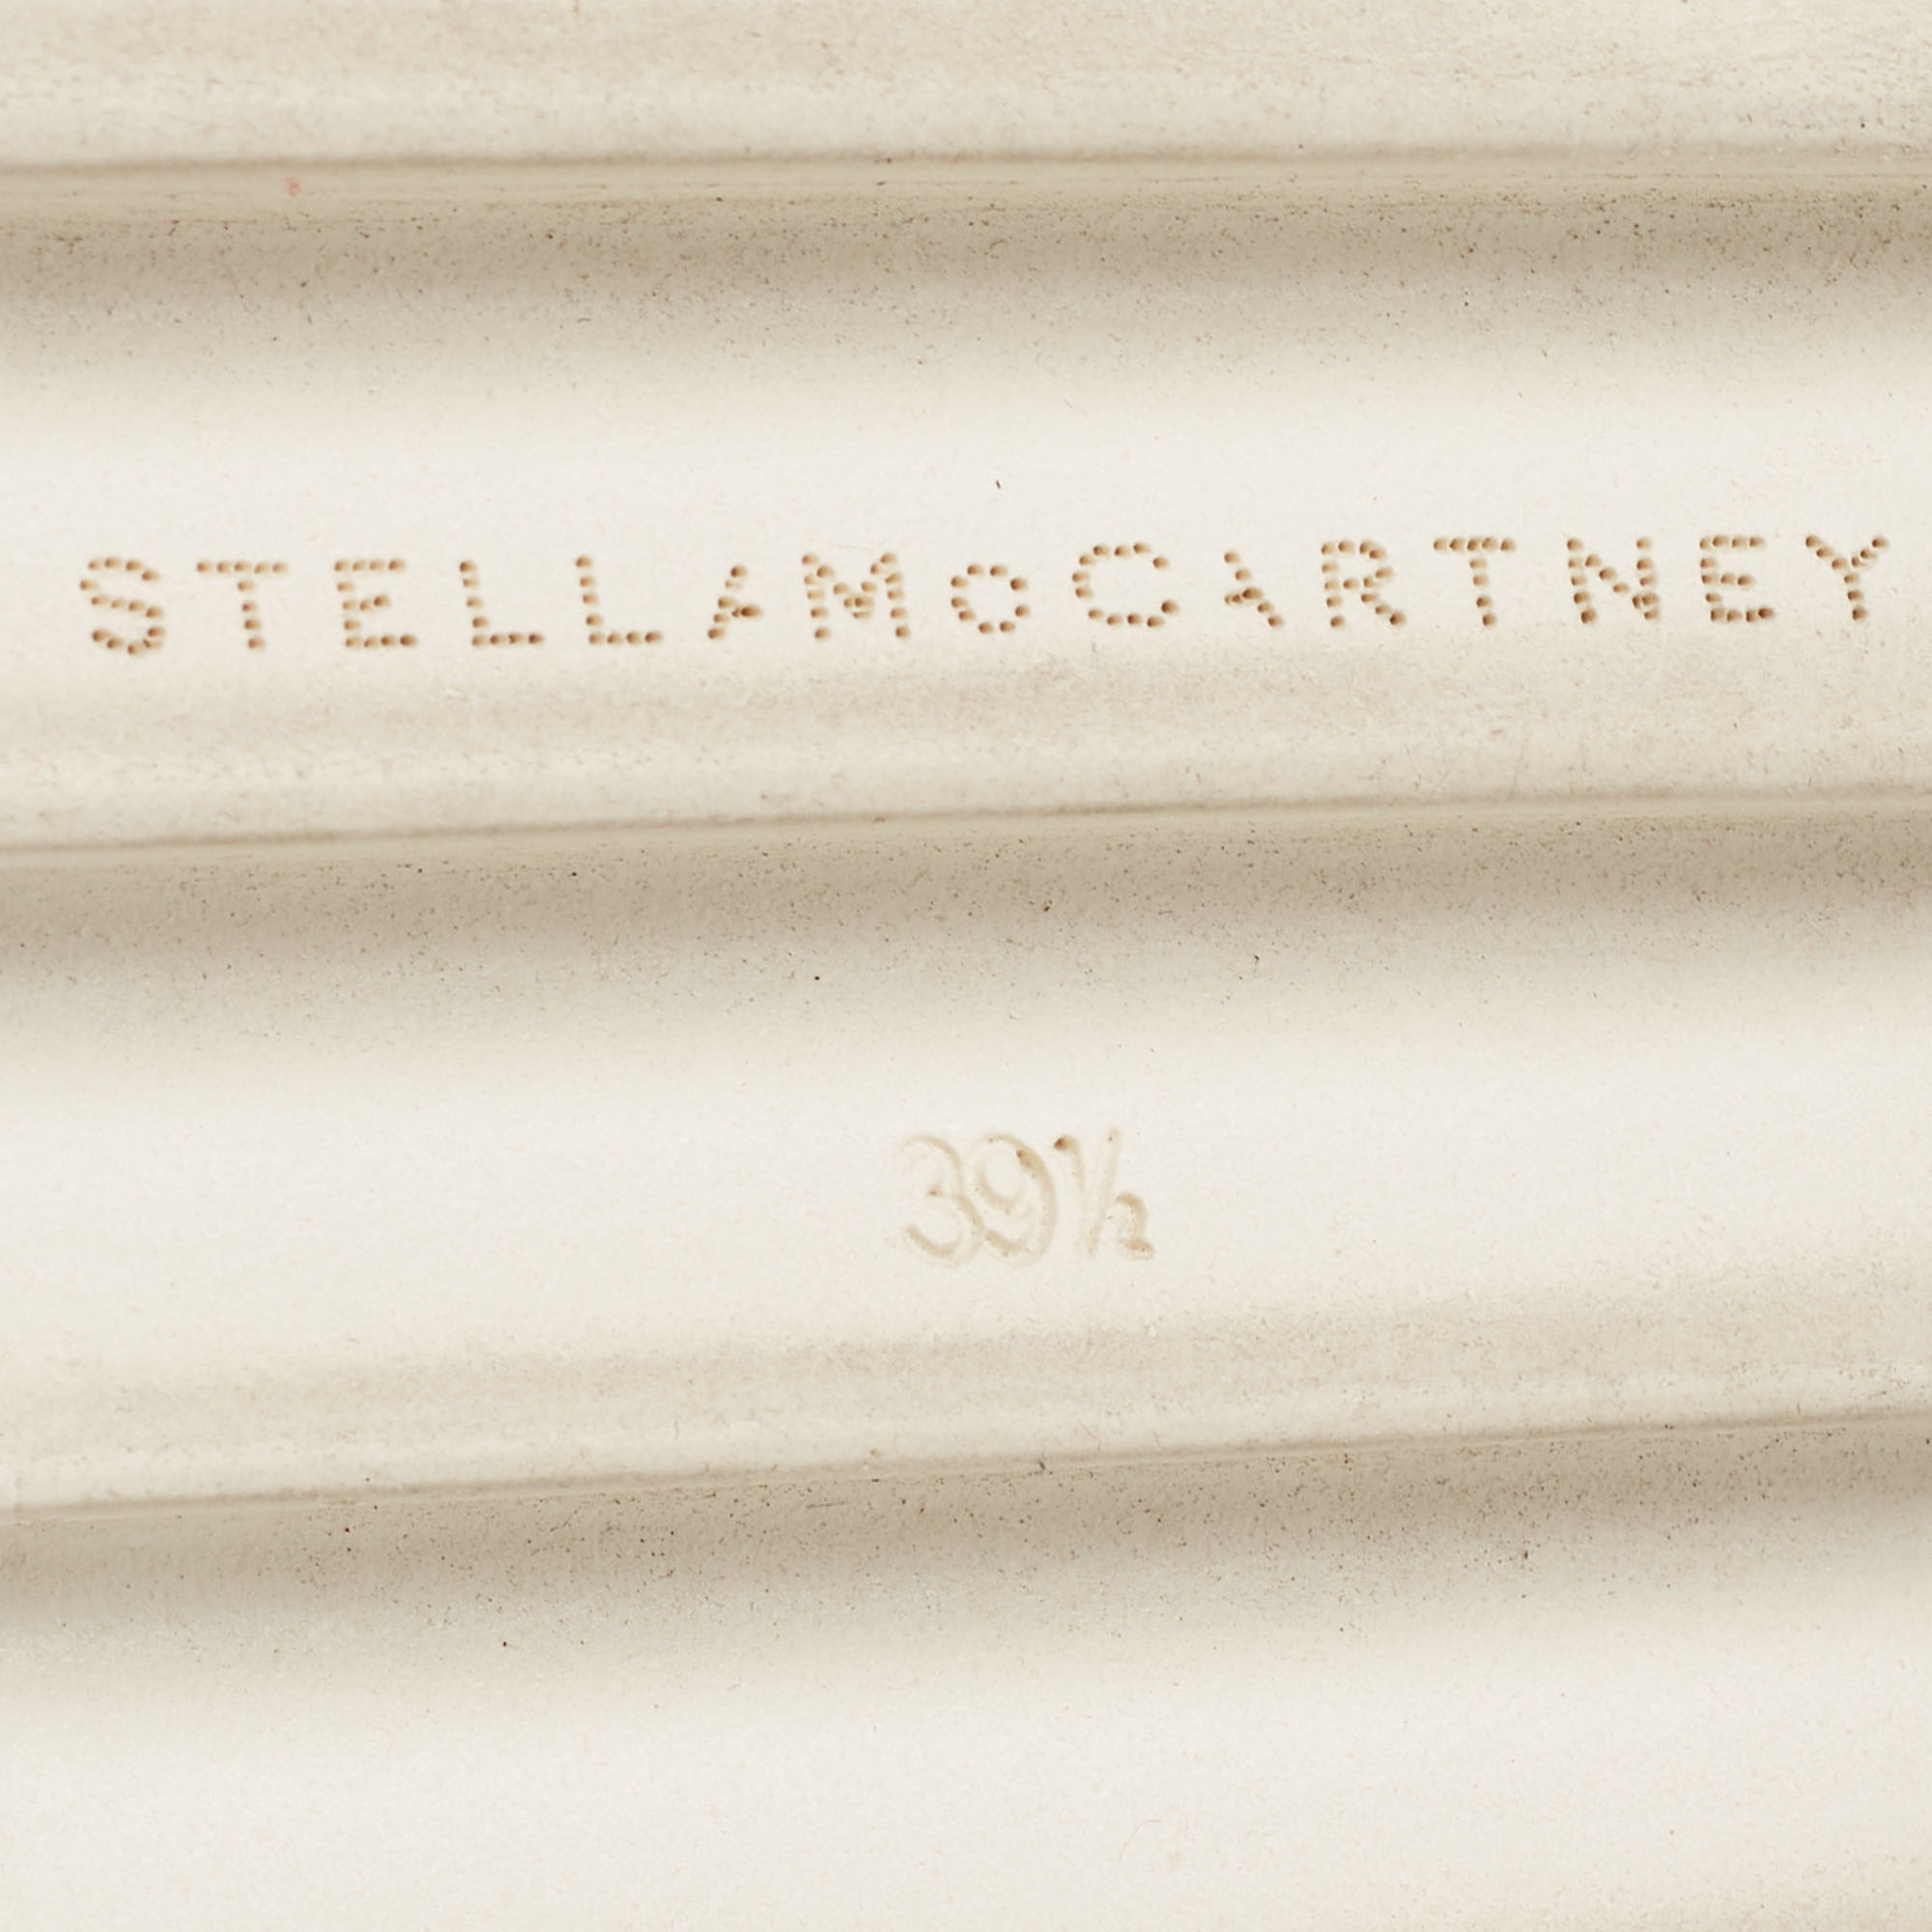 Stella McCartney Metallic Faux Leather Elyse Star Sneakers Size 38.5